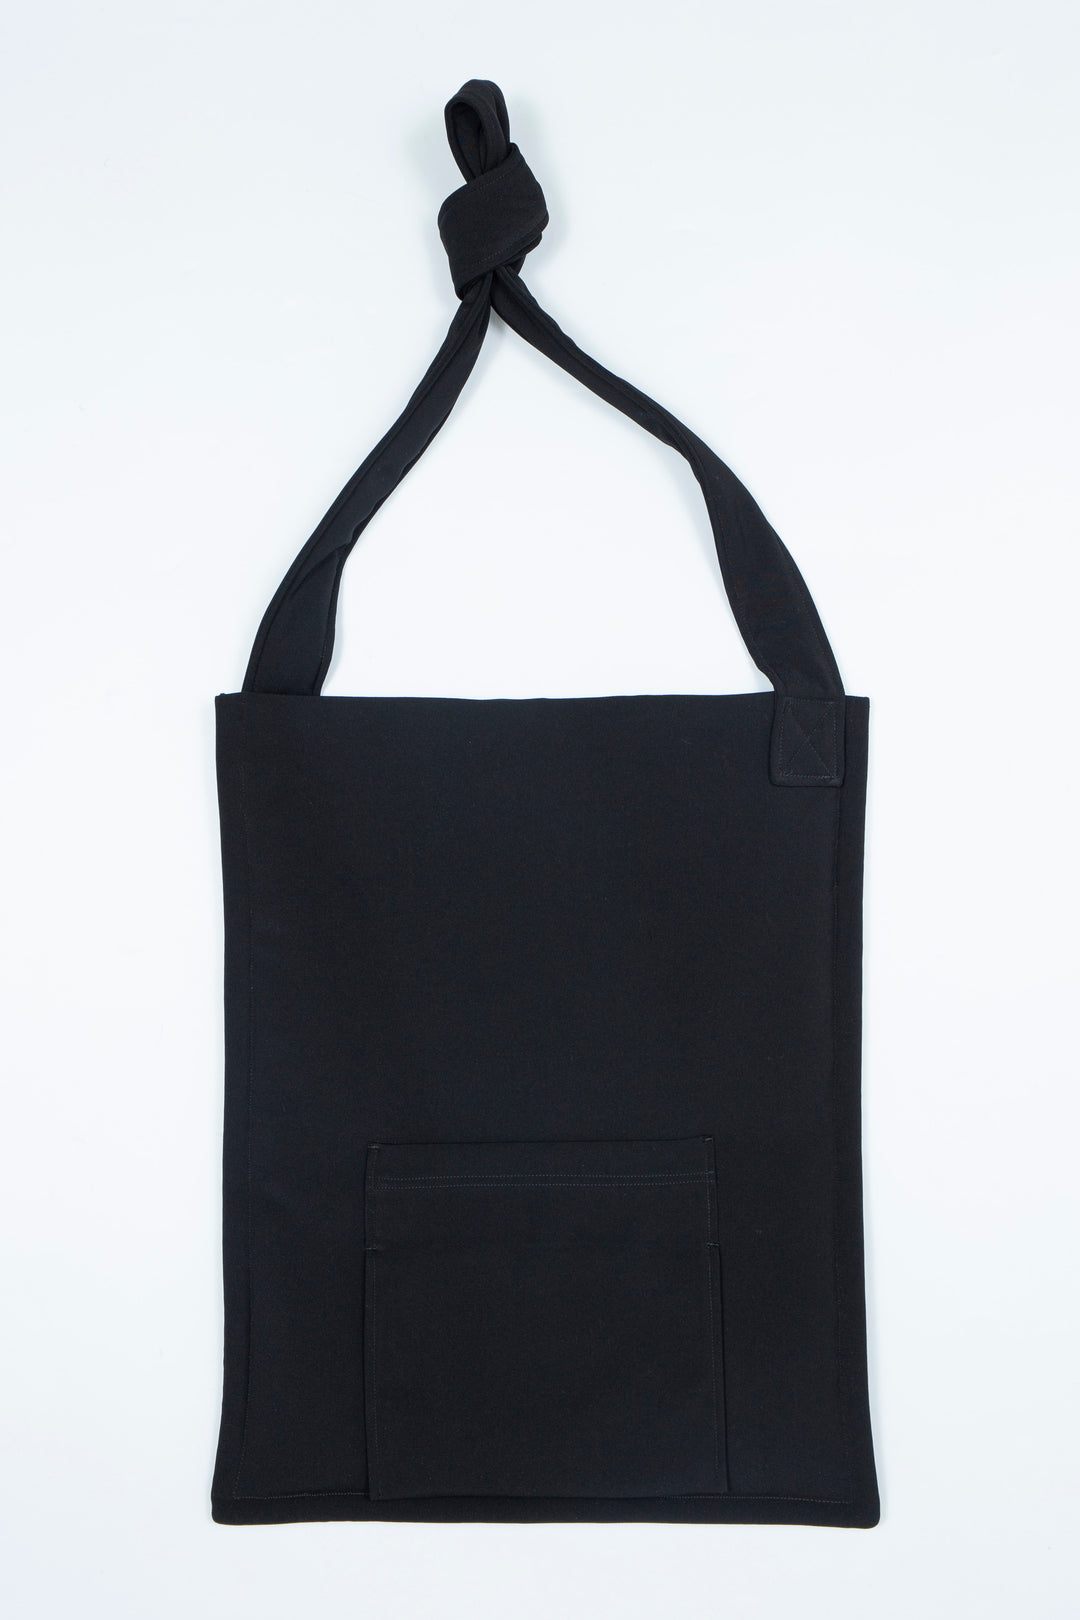 Padding Bag black